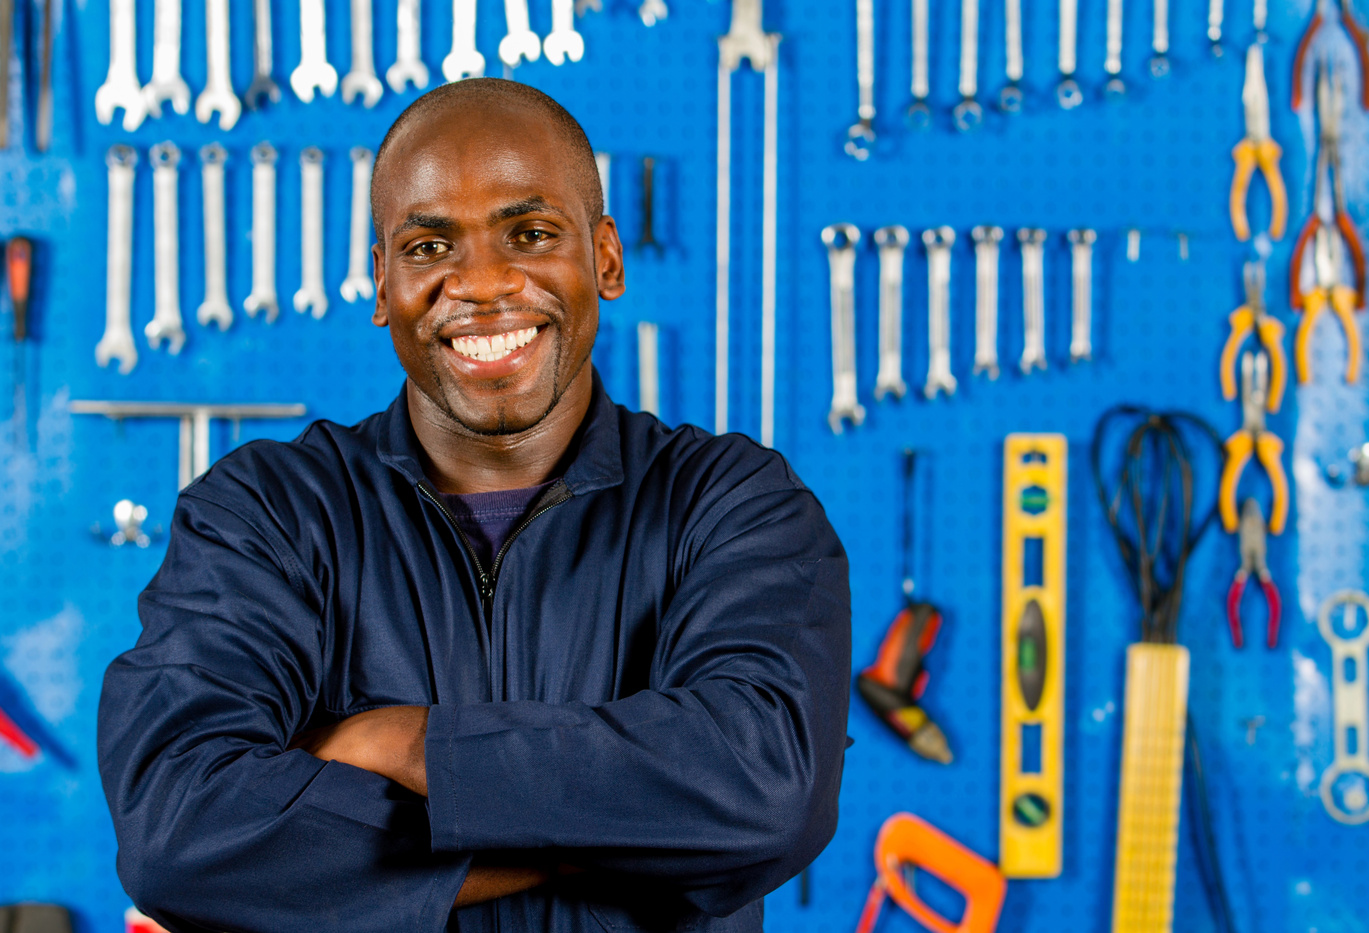 Black mechanic smiling